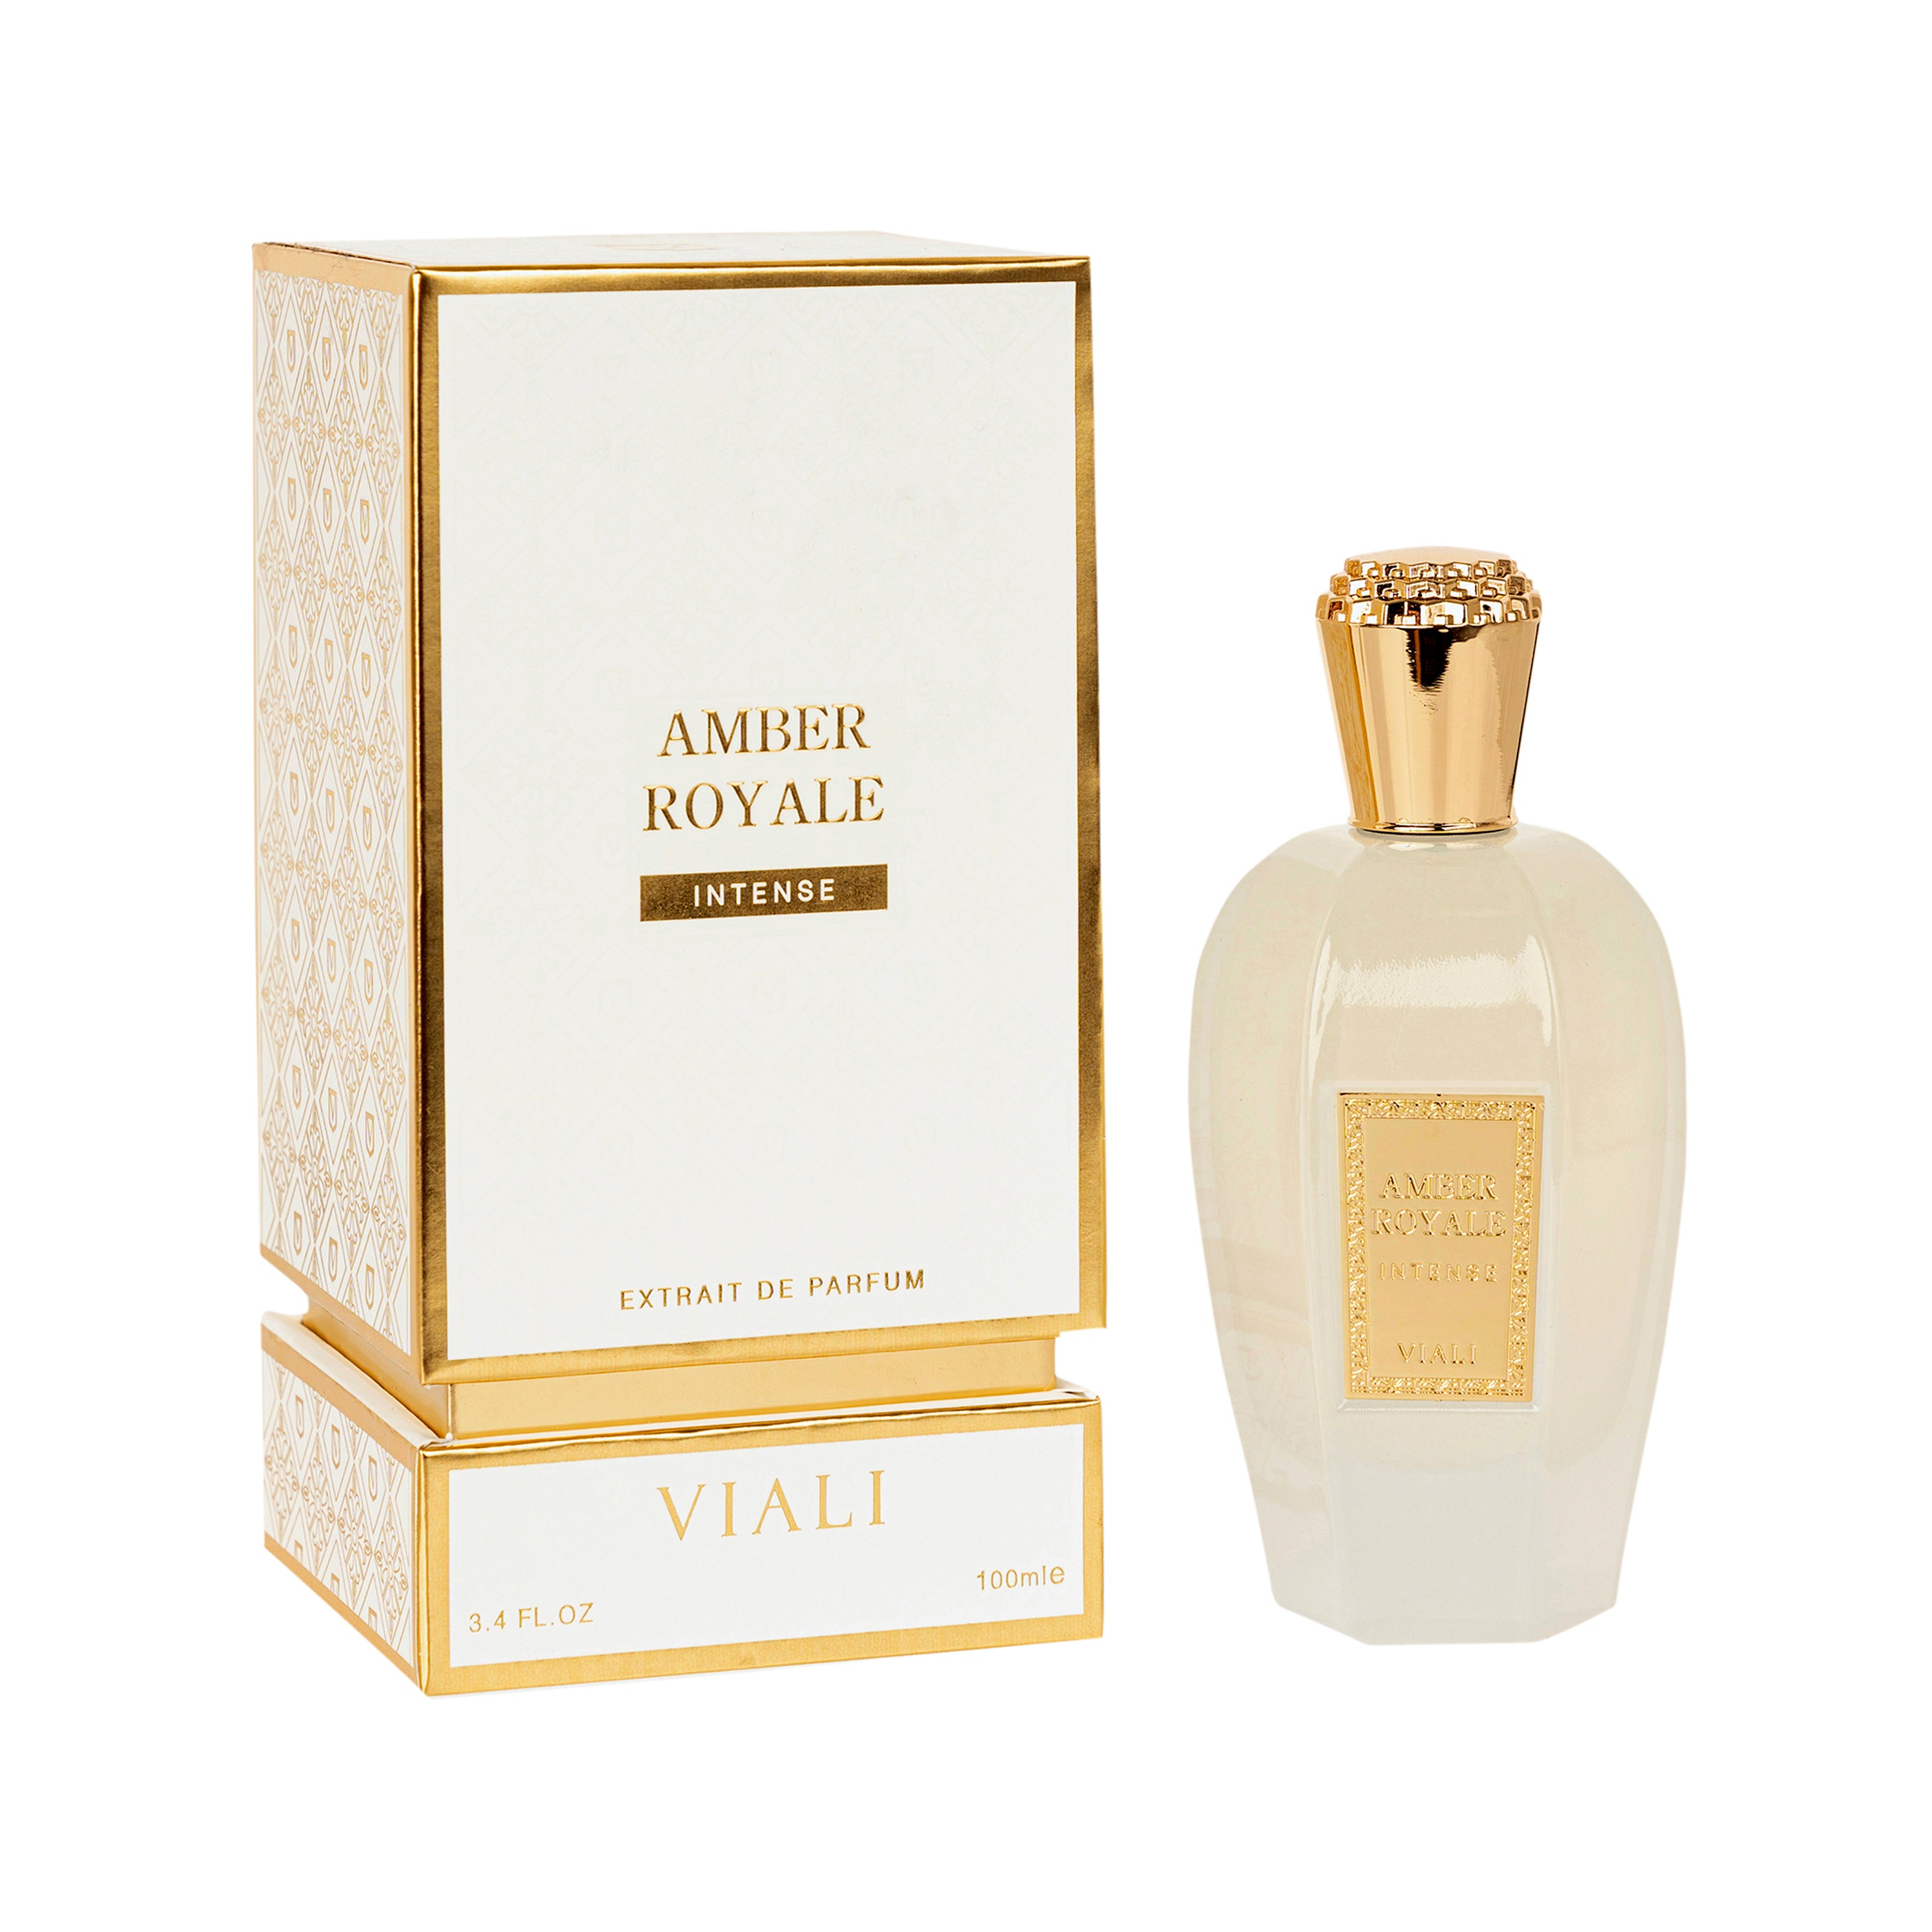 Viali Amber Royale Intense Eau de Parfum Spray 100ml